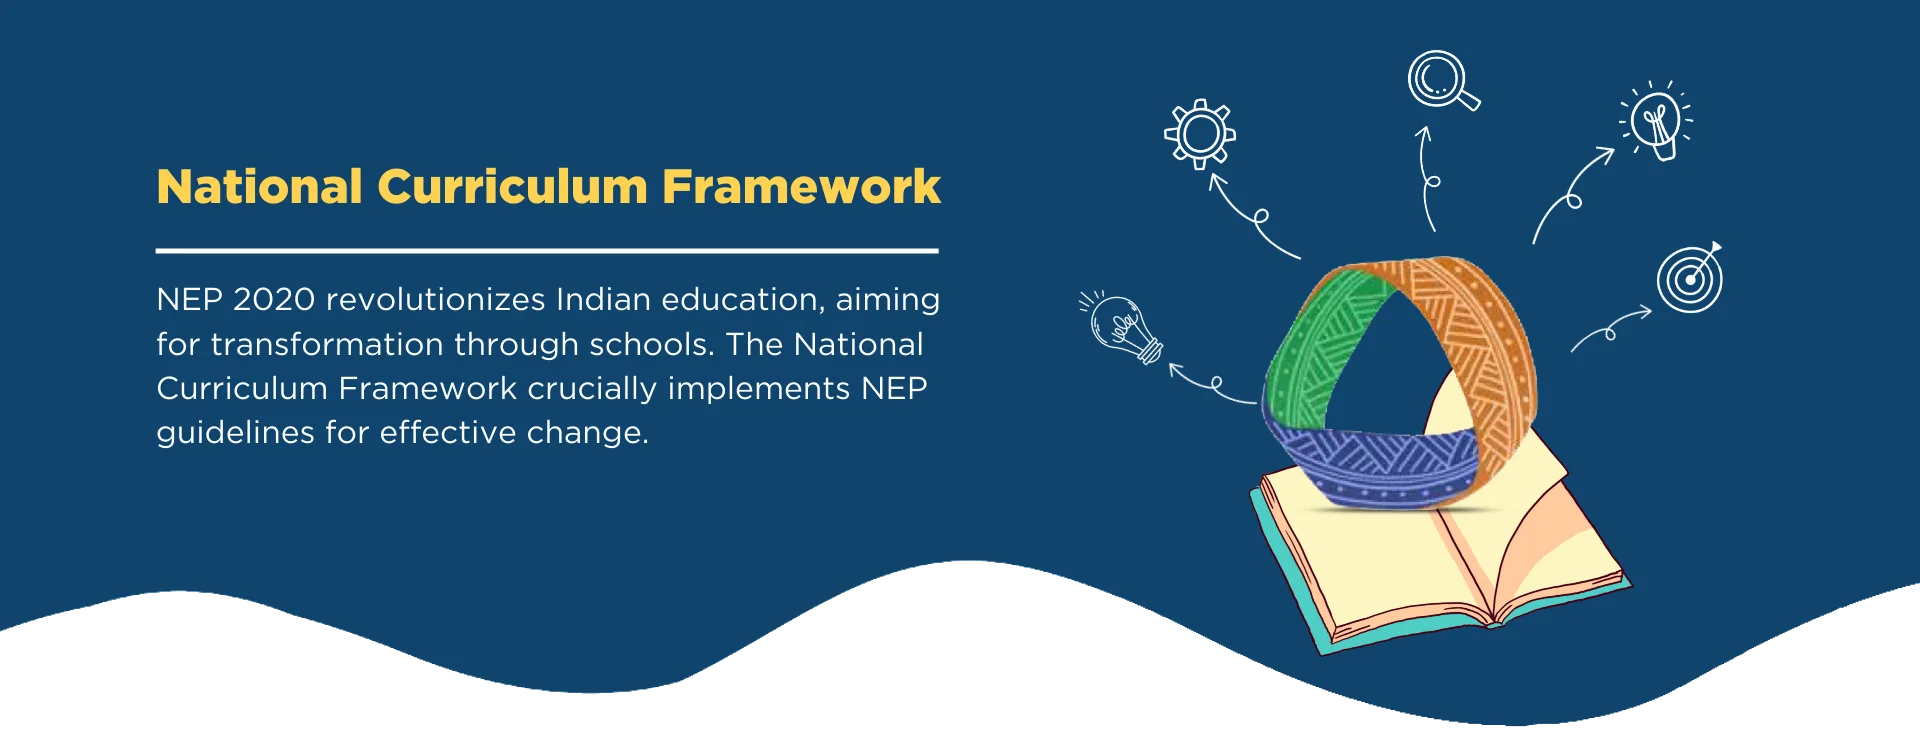 National Curriculum Framework Bnanner